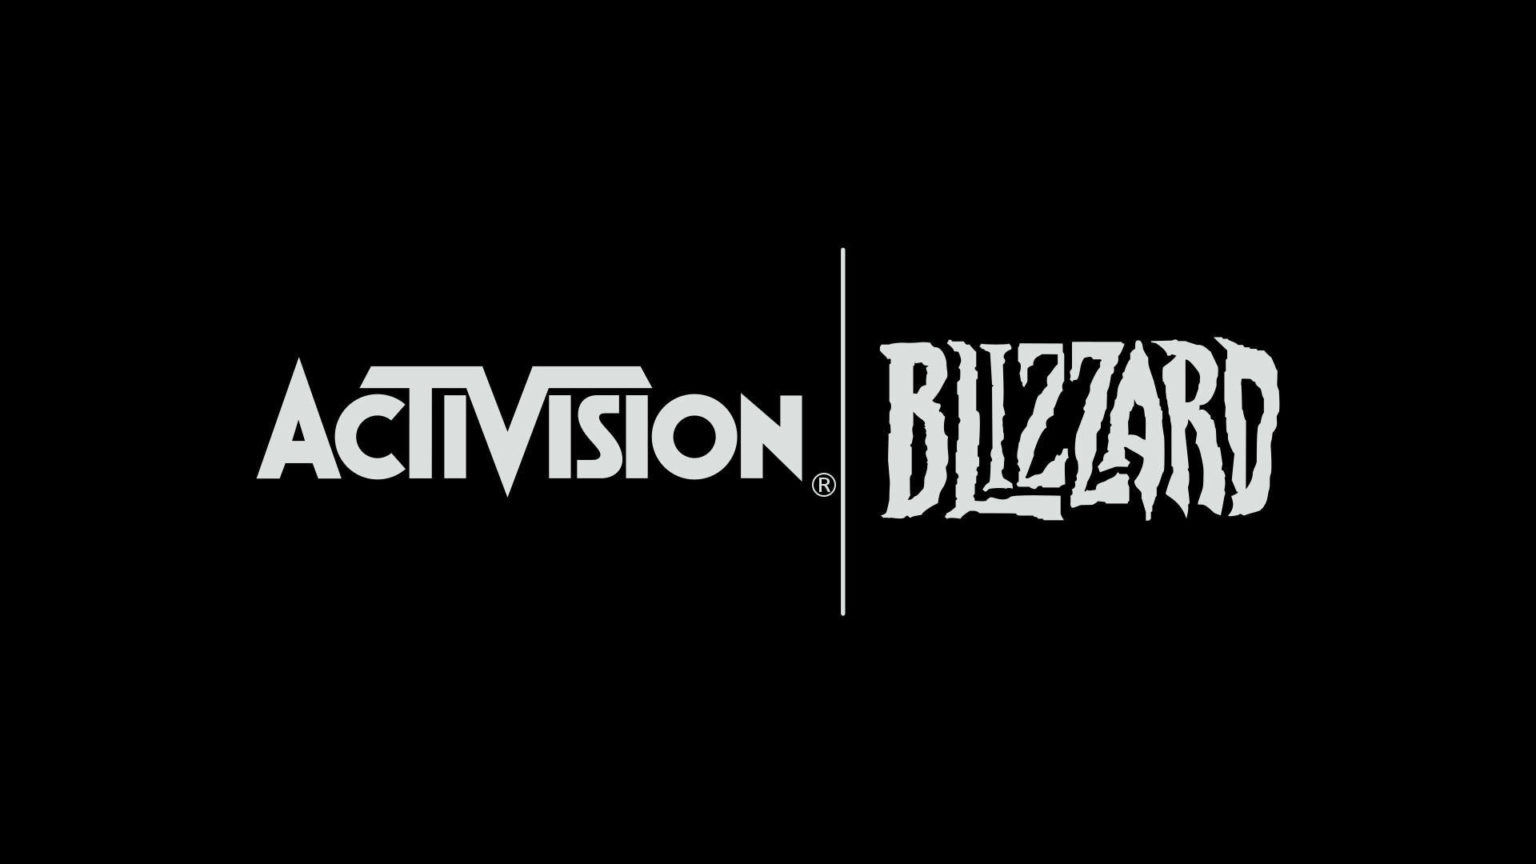 Microsoft acquired Activision Blizzard in a $68 billion deal